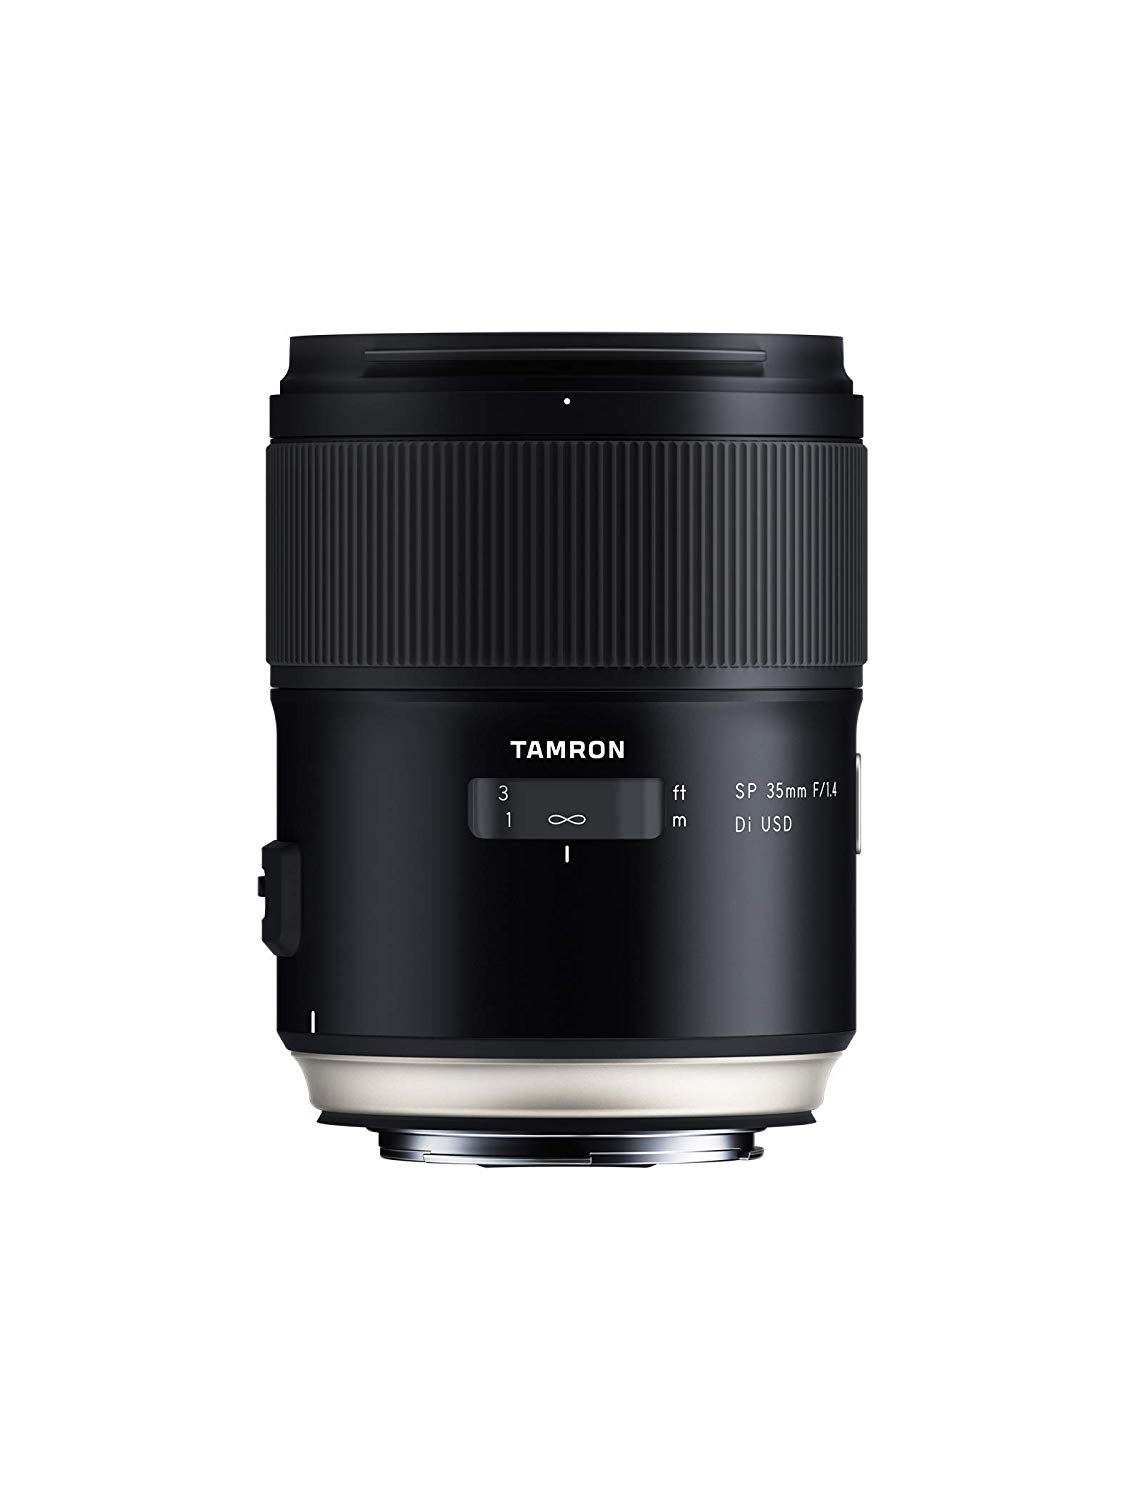 Tamron कैनन EF के लिए टैमरॉन SP 35mm f/1.4 di USD लेंस